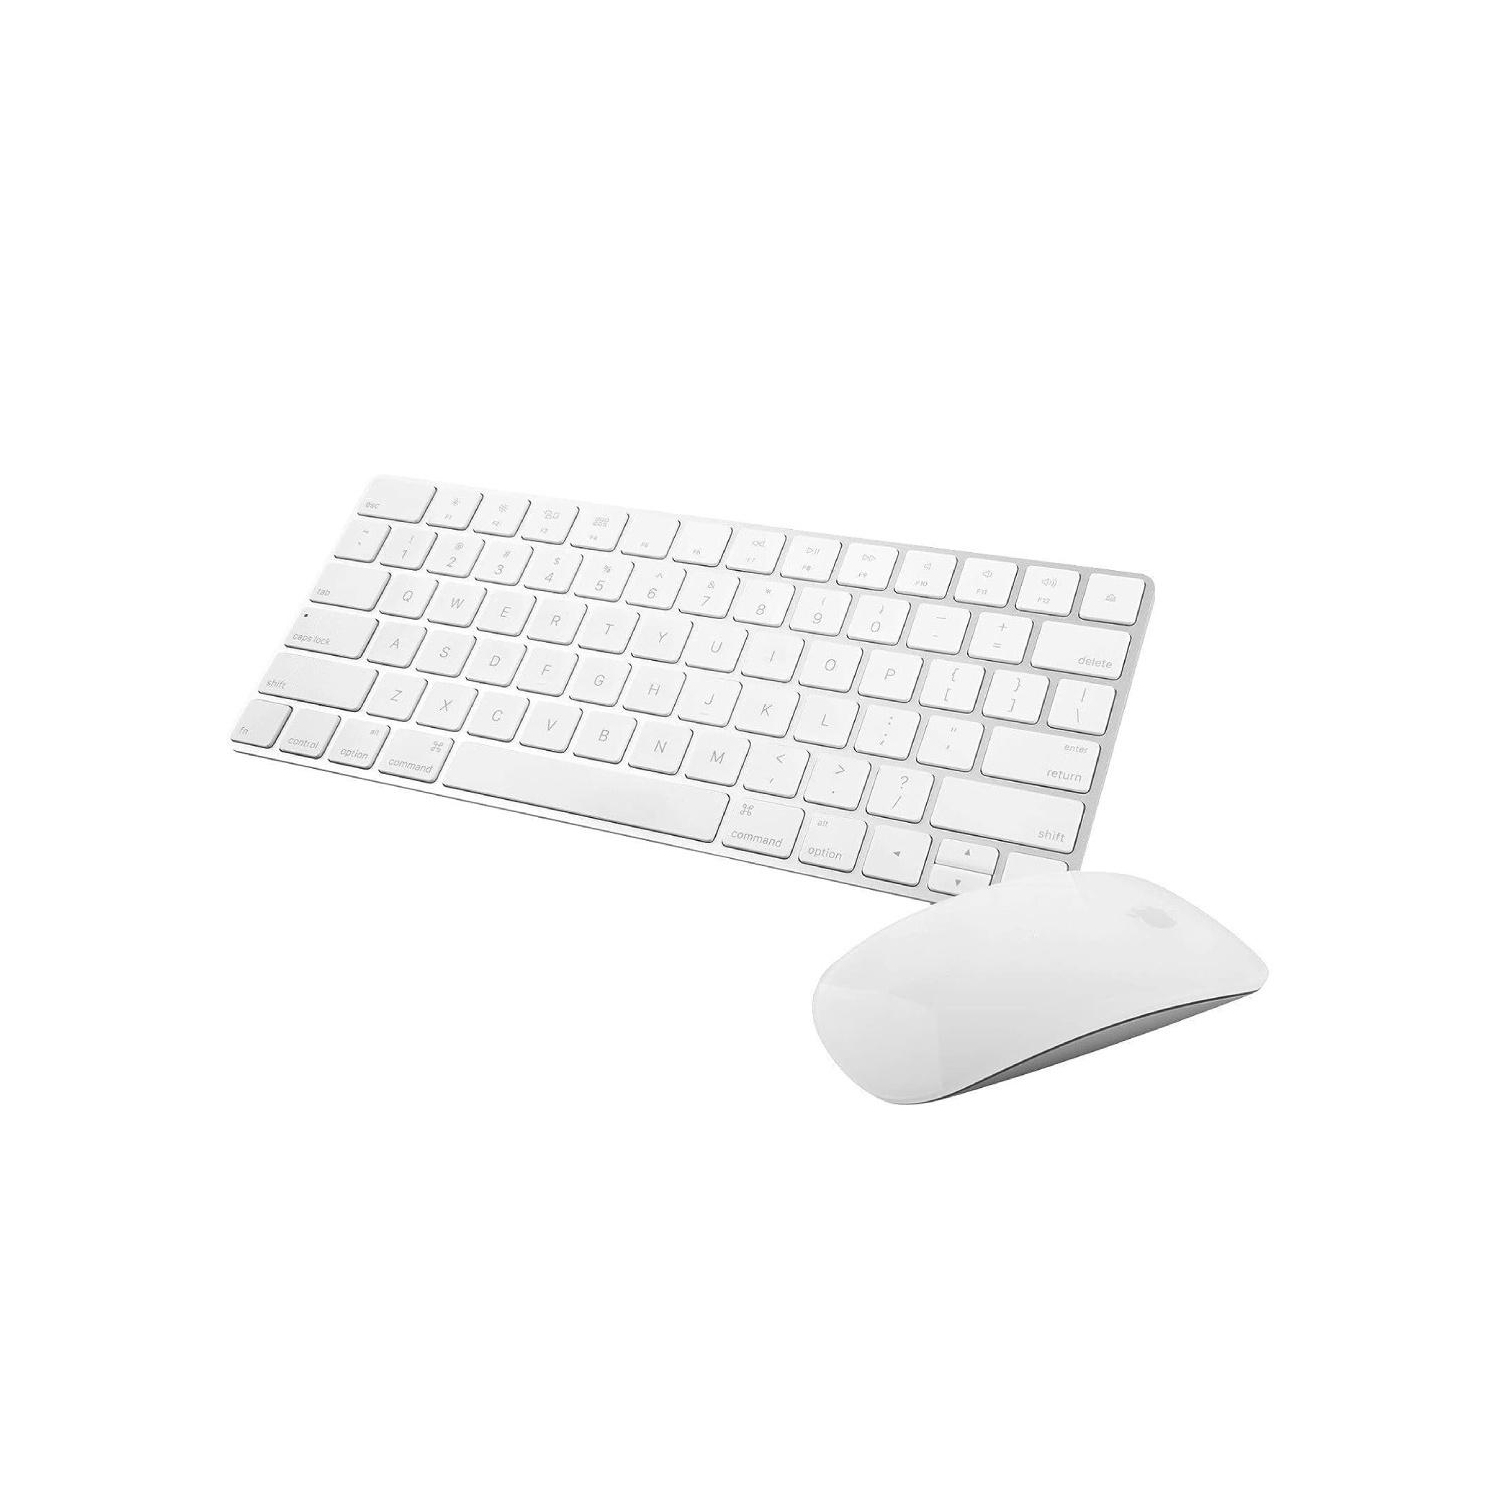 Refurbished (Good) Apple Wireless Magic Keyboard 2 and Apple Magic Bluetooth Mouse 2 Bundle